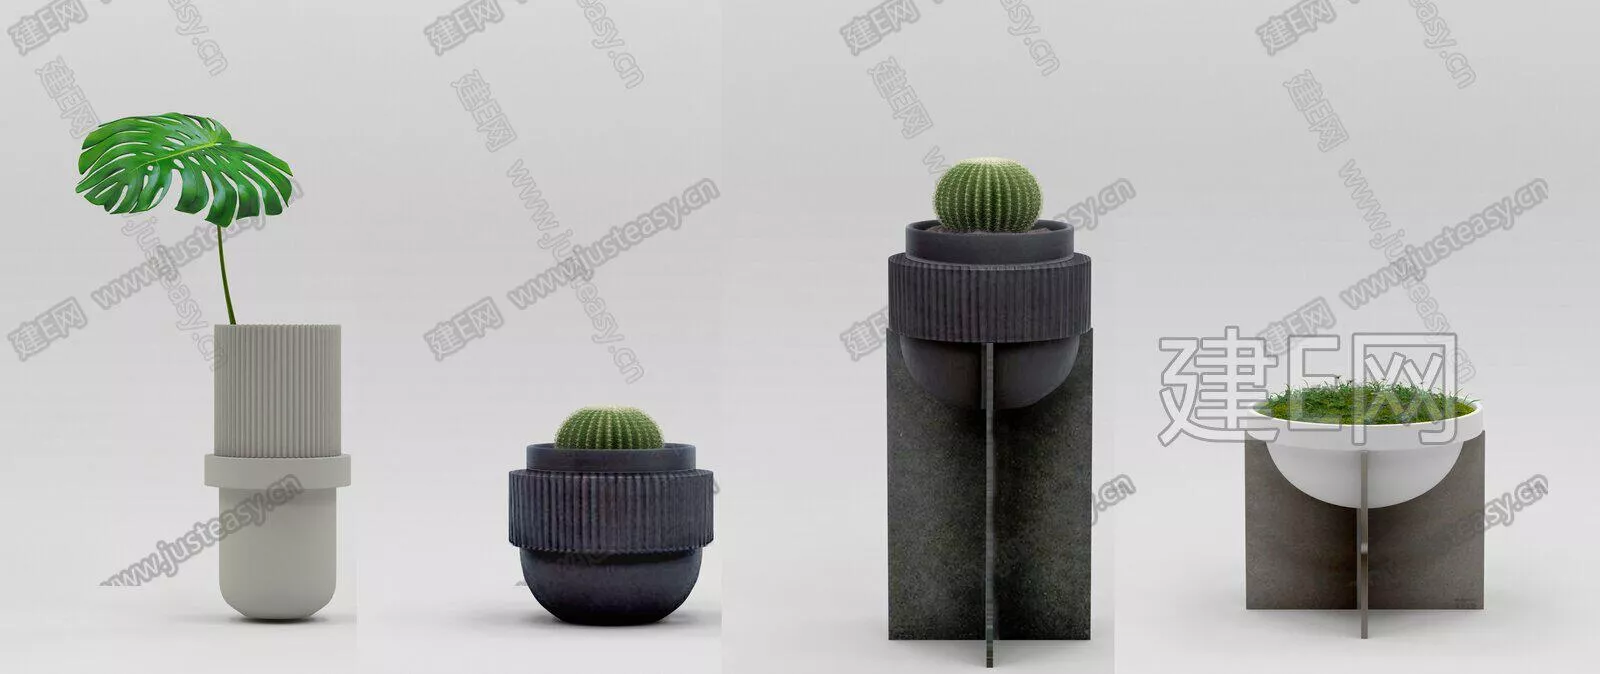 NORDIC POTTED PLANT - SKETCHUP 3D MODEL - ENSCAPE - 111758769